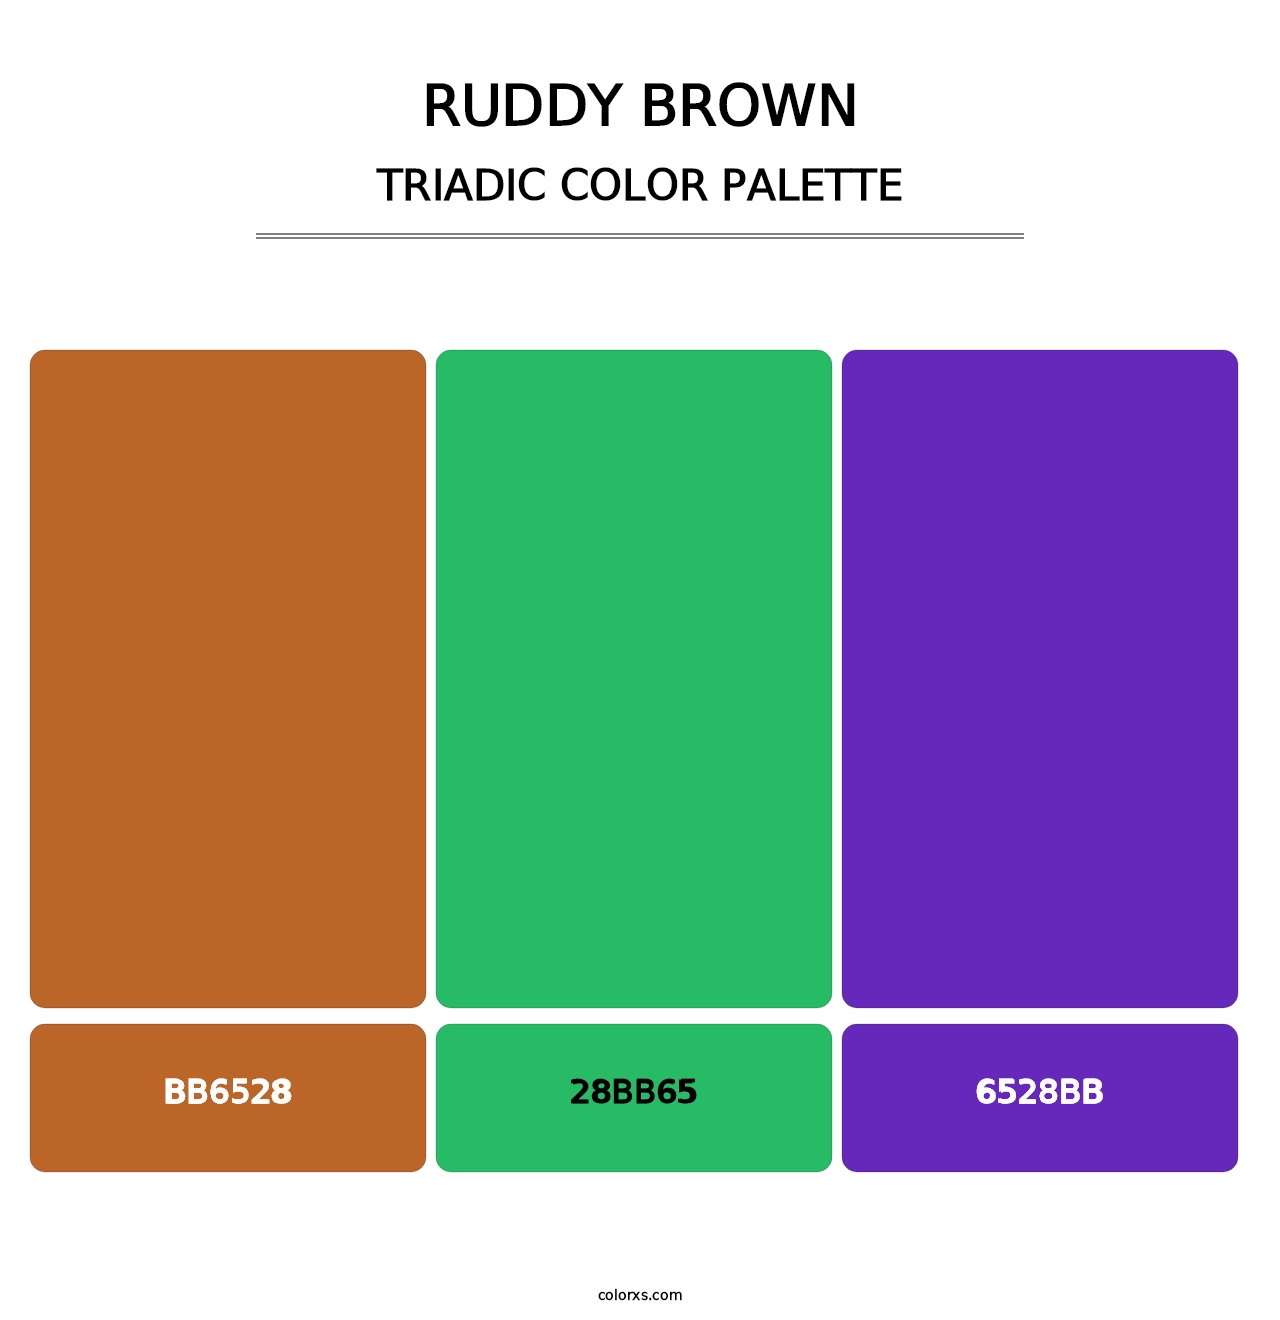 Ruddy Brown - Triadic Color Palette